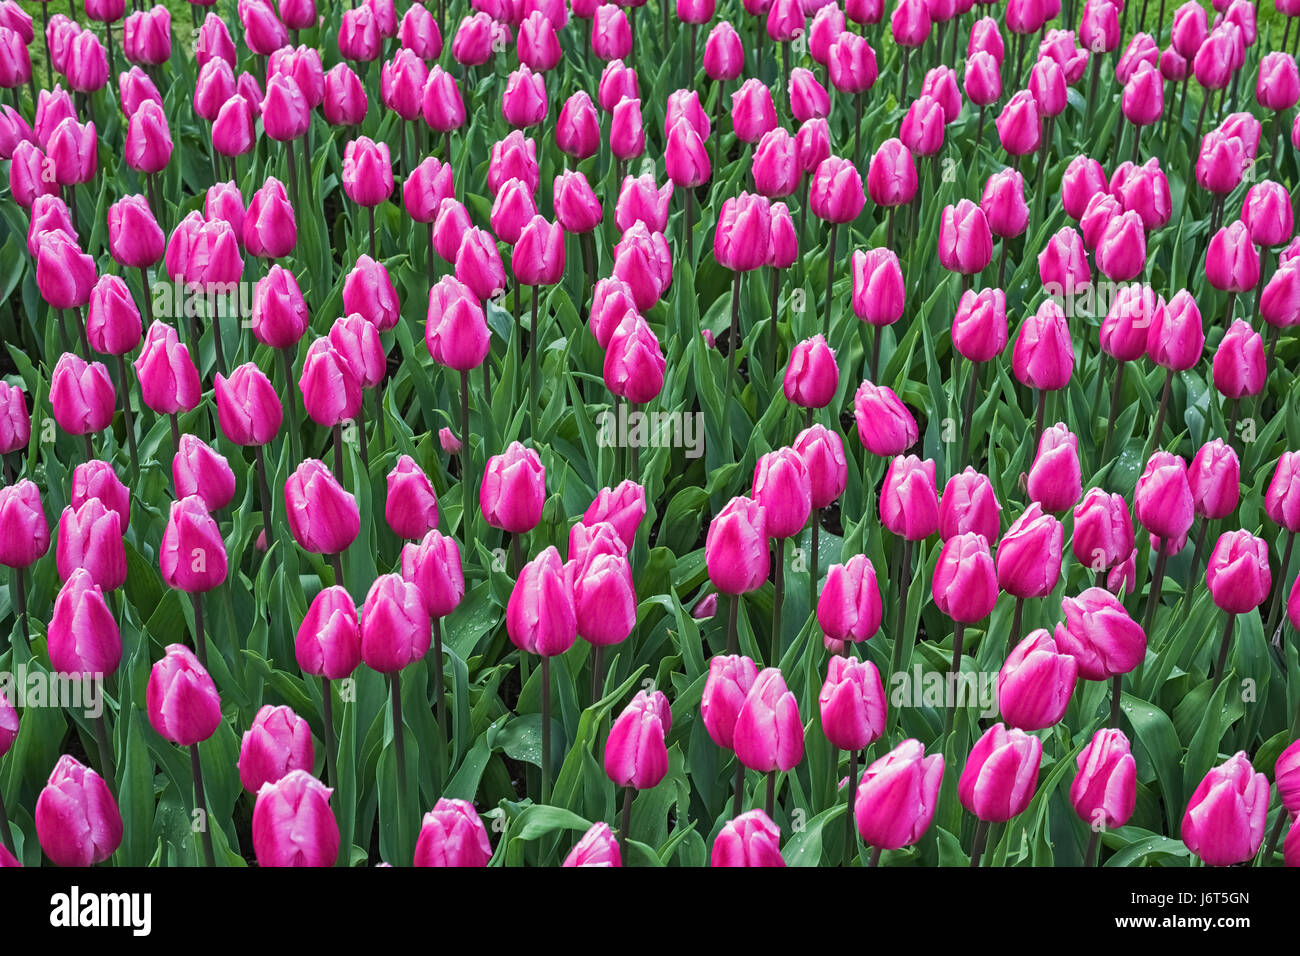 Blooming pink tulips, Keukenhof garden, Netherlands, Europe. Spring outdoor scenery. Flower bed in park. Beautiful romantic landscape Stock Photo